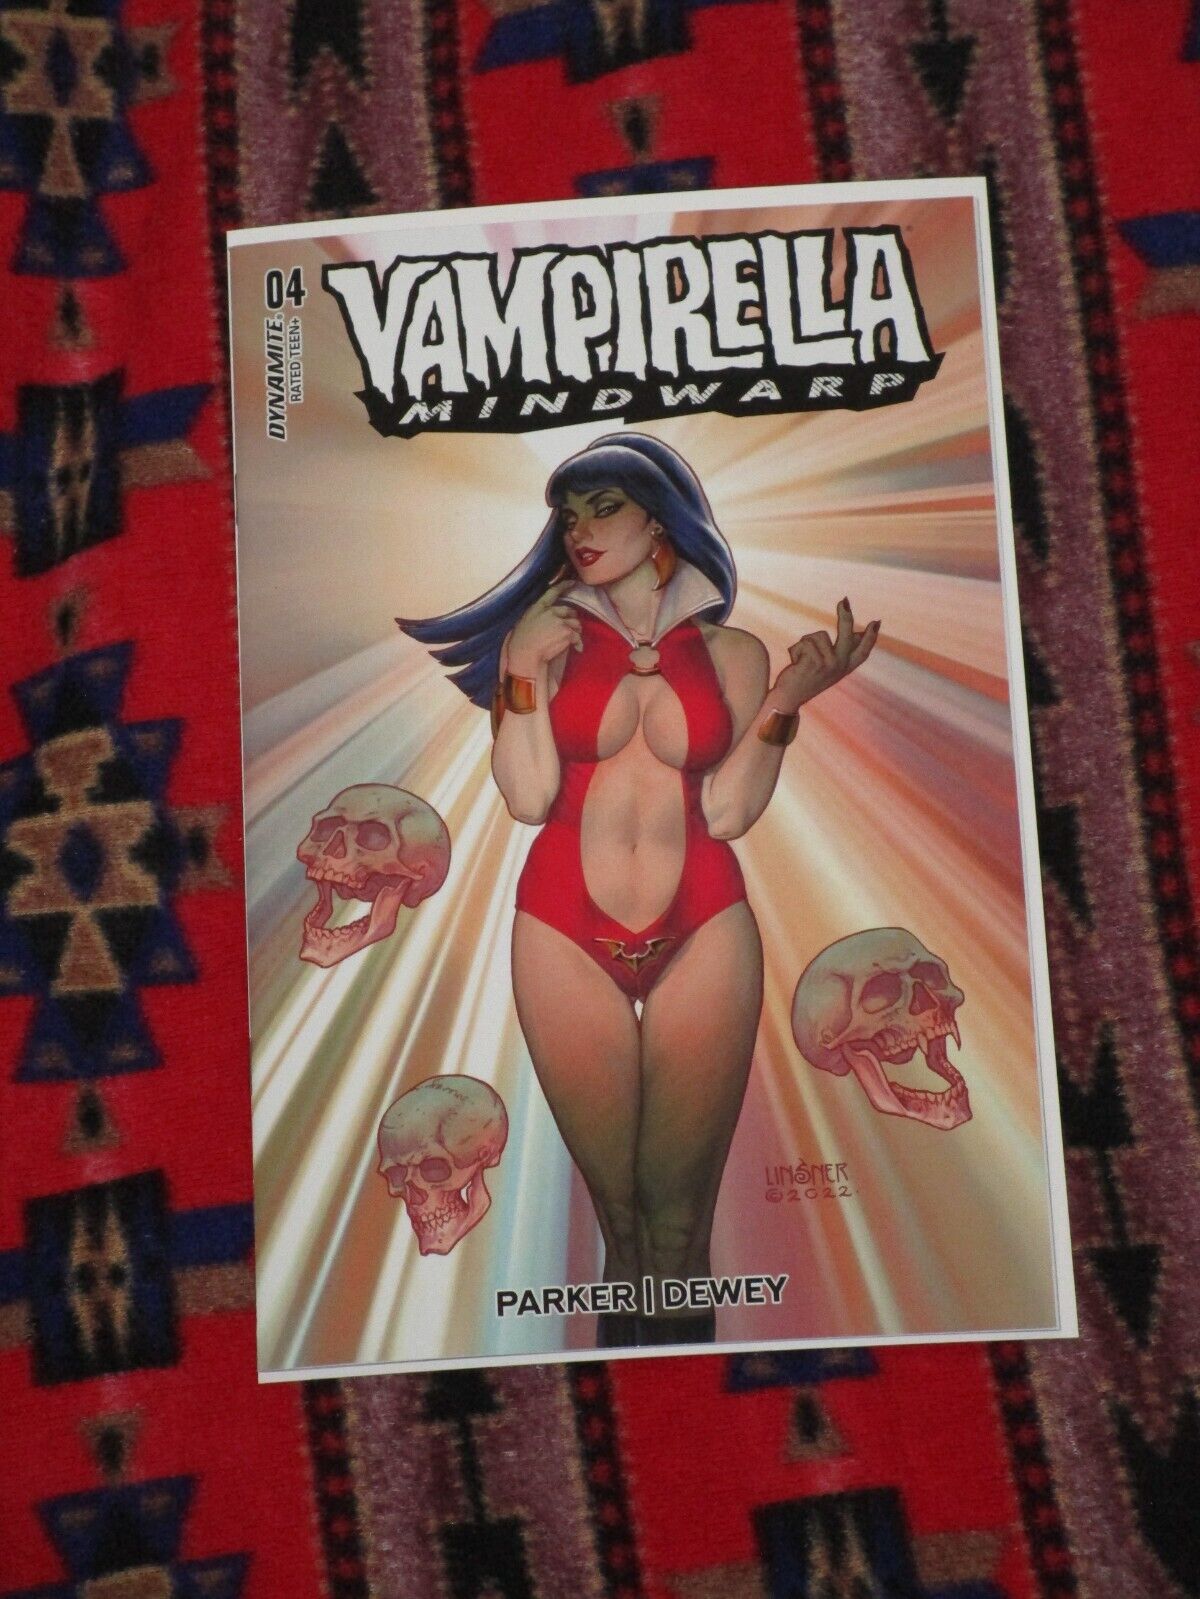 Vampirella: Mindwarp #4 (Cover A by Joseph Michael Linsner) From 2022